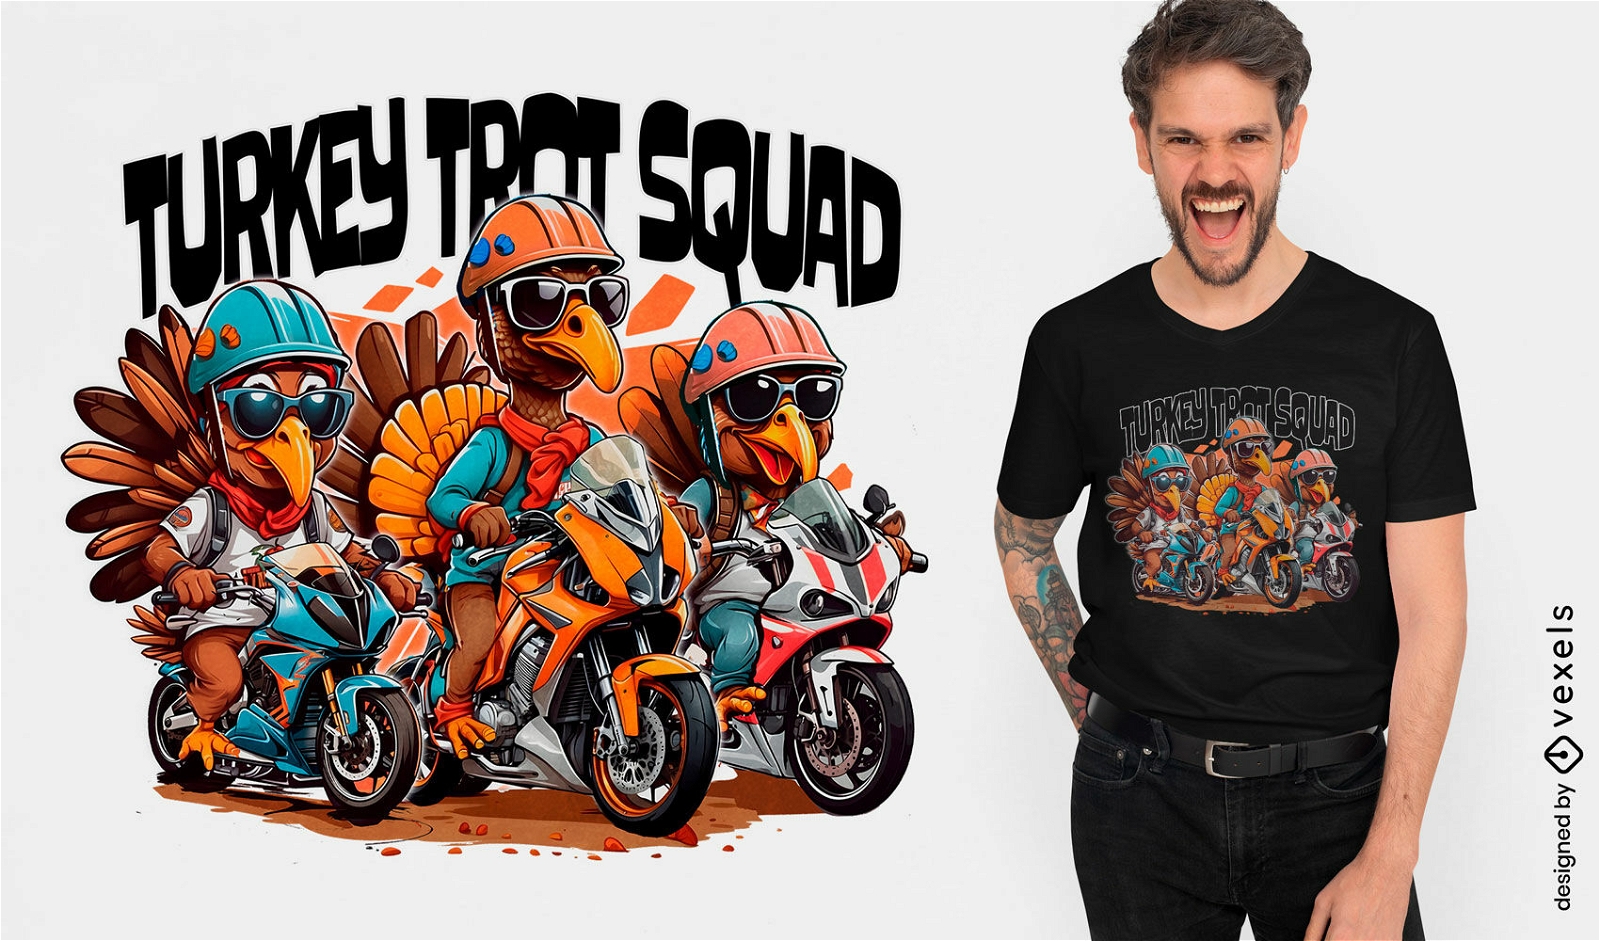 Turkey Trot Squad motorbike t-shirt design